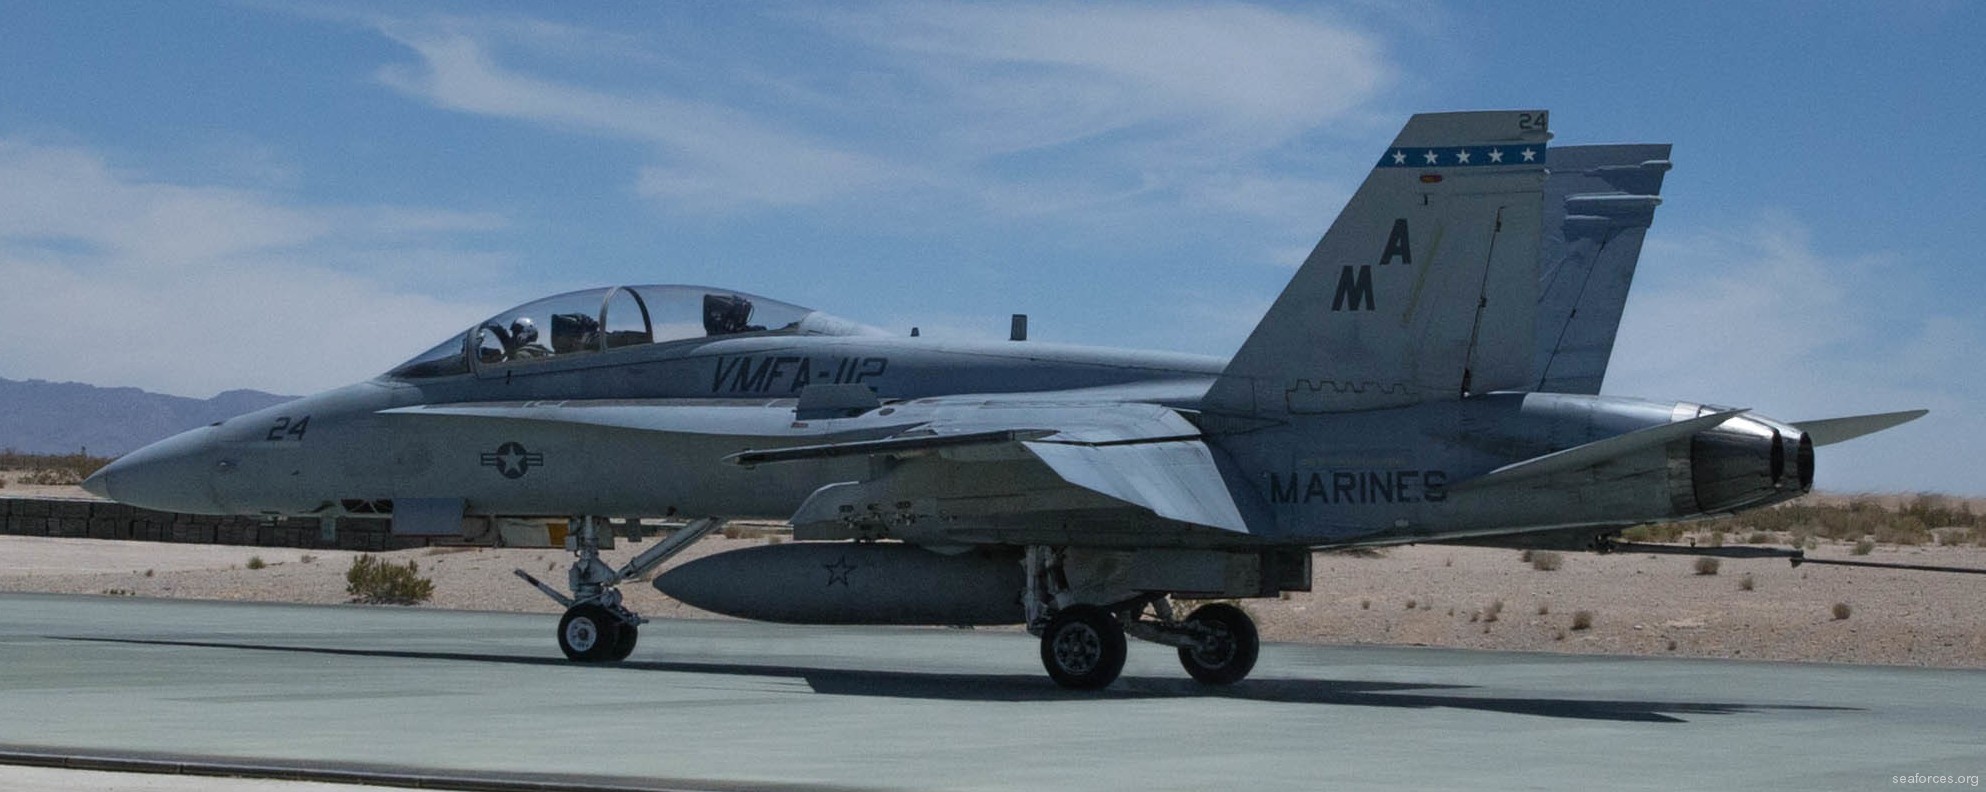 vmfa-112 cowboys marine fighter attack squadron f/a-18b hornet 03 twentynine palms california